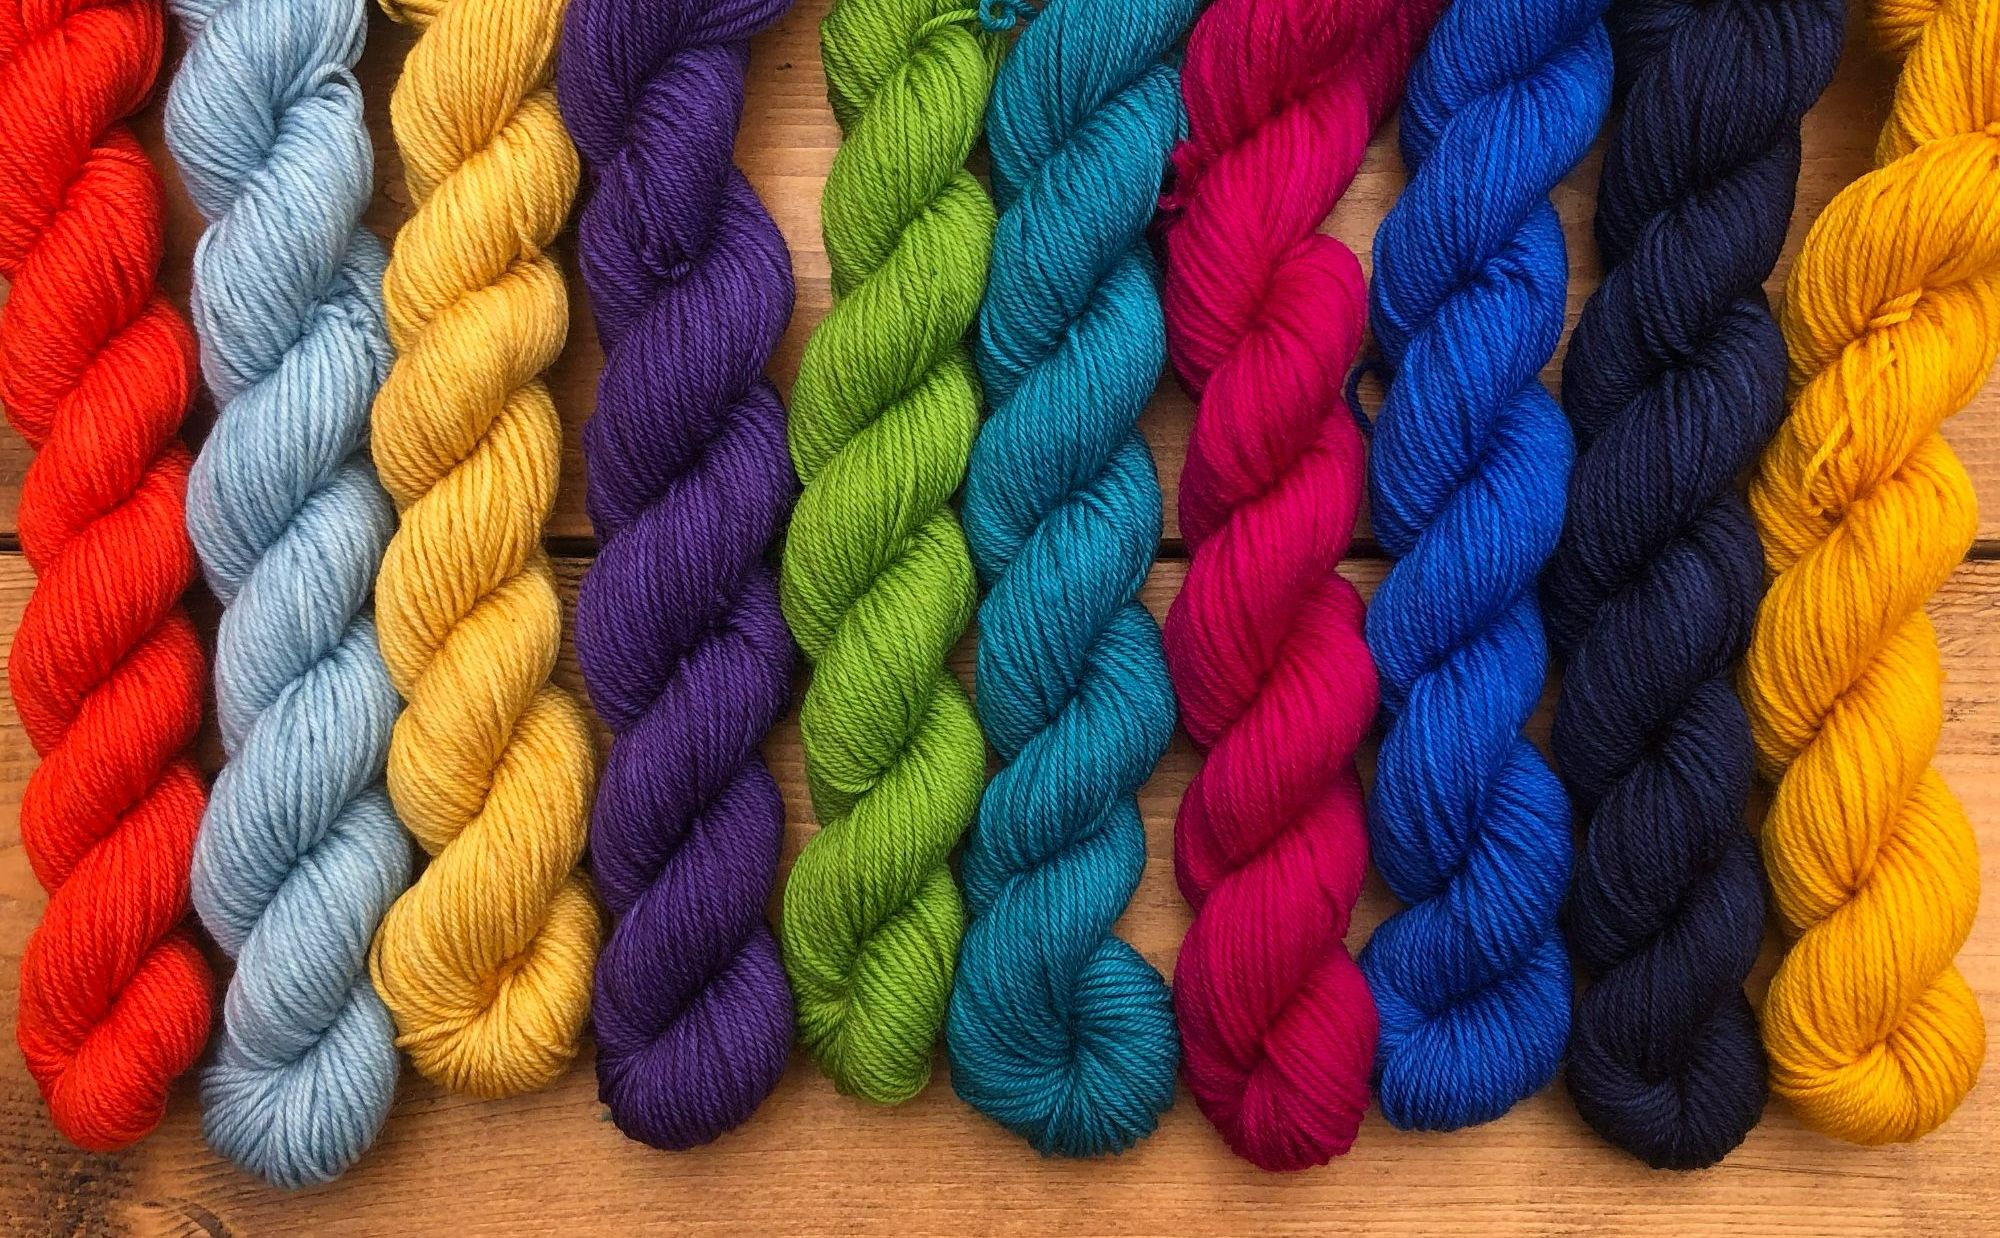 Mini yarn skeins